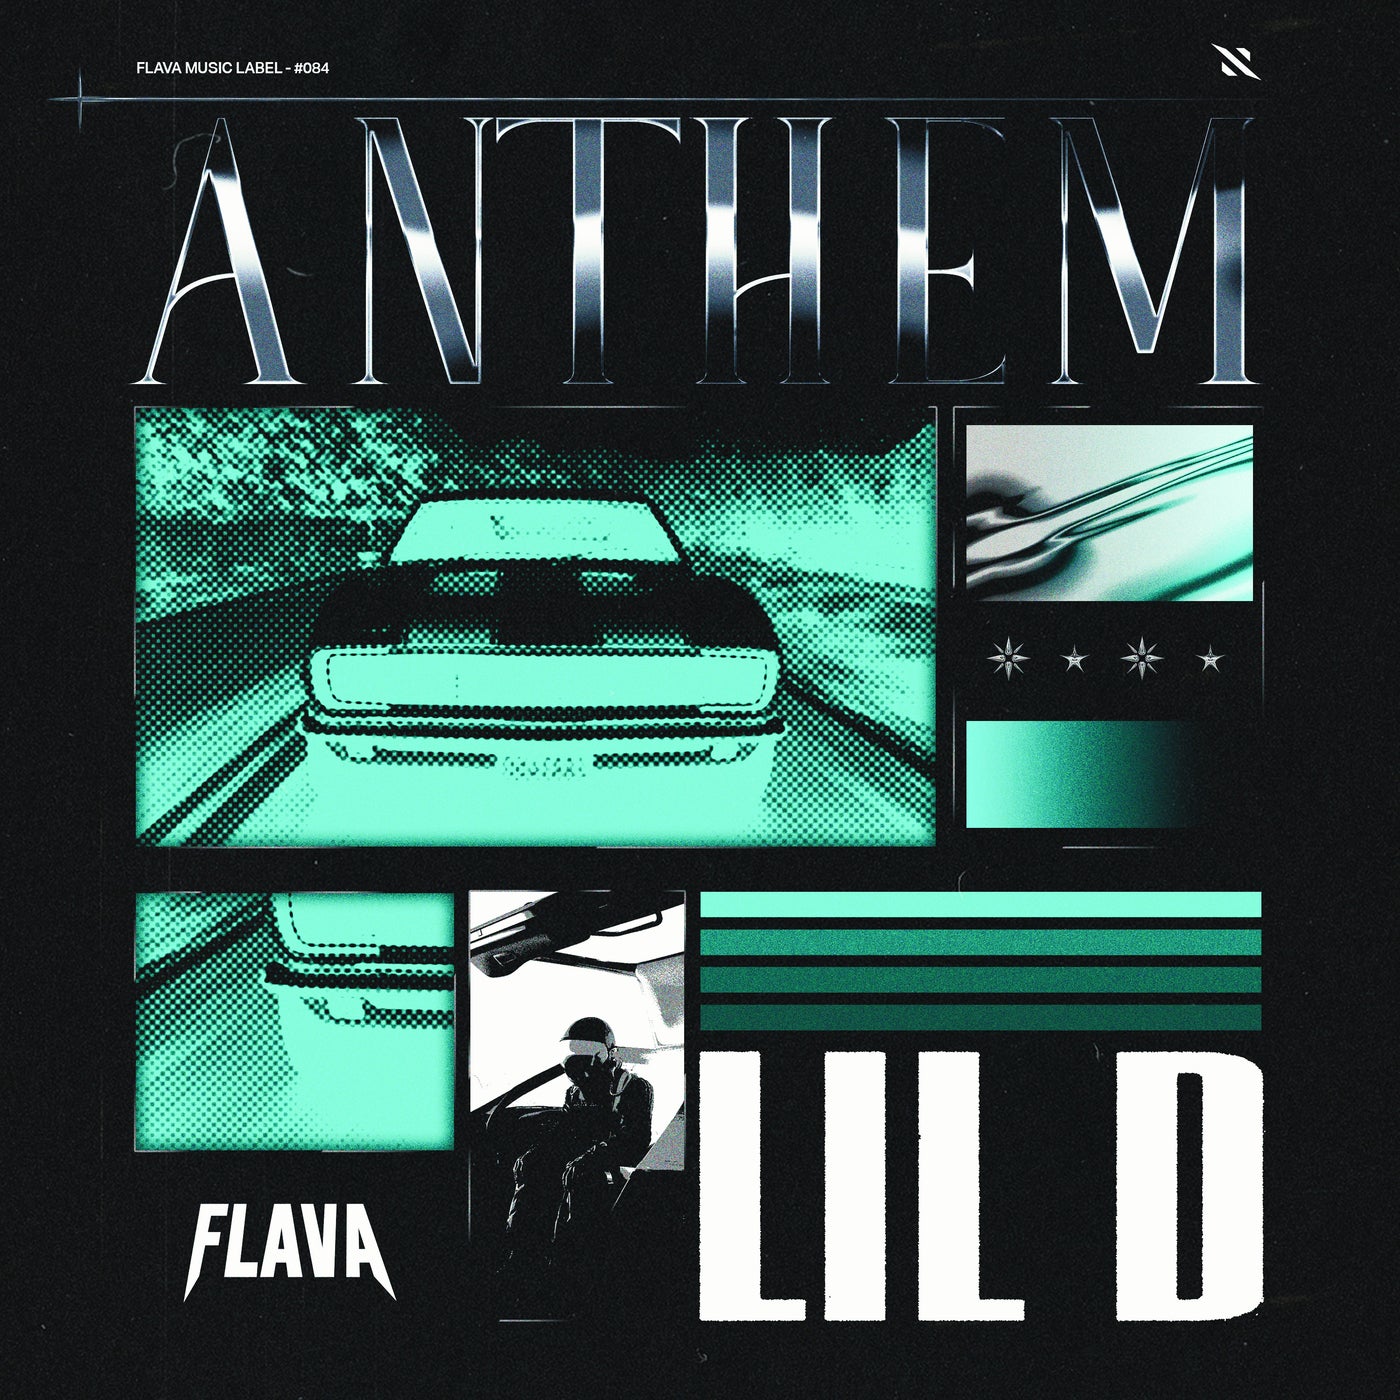 FLAVA Music & Downloads on Beatport